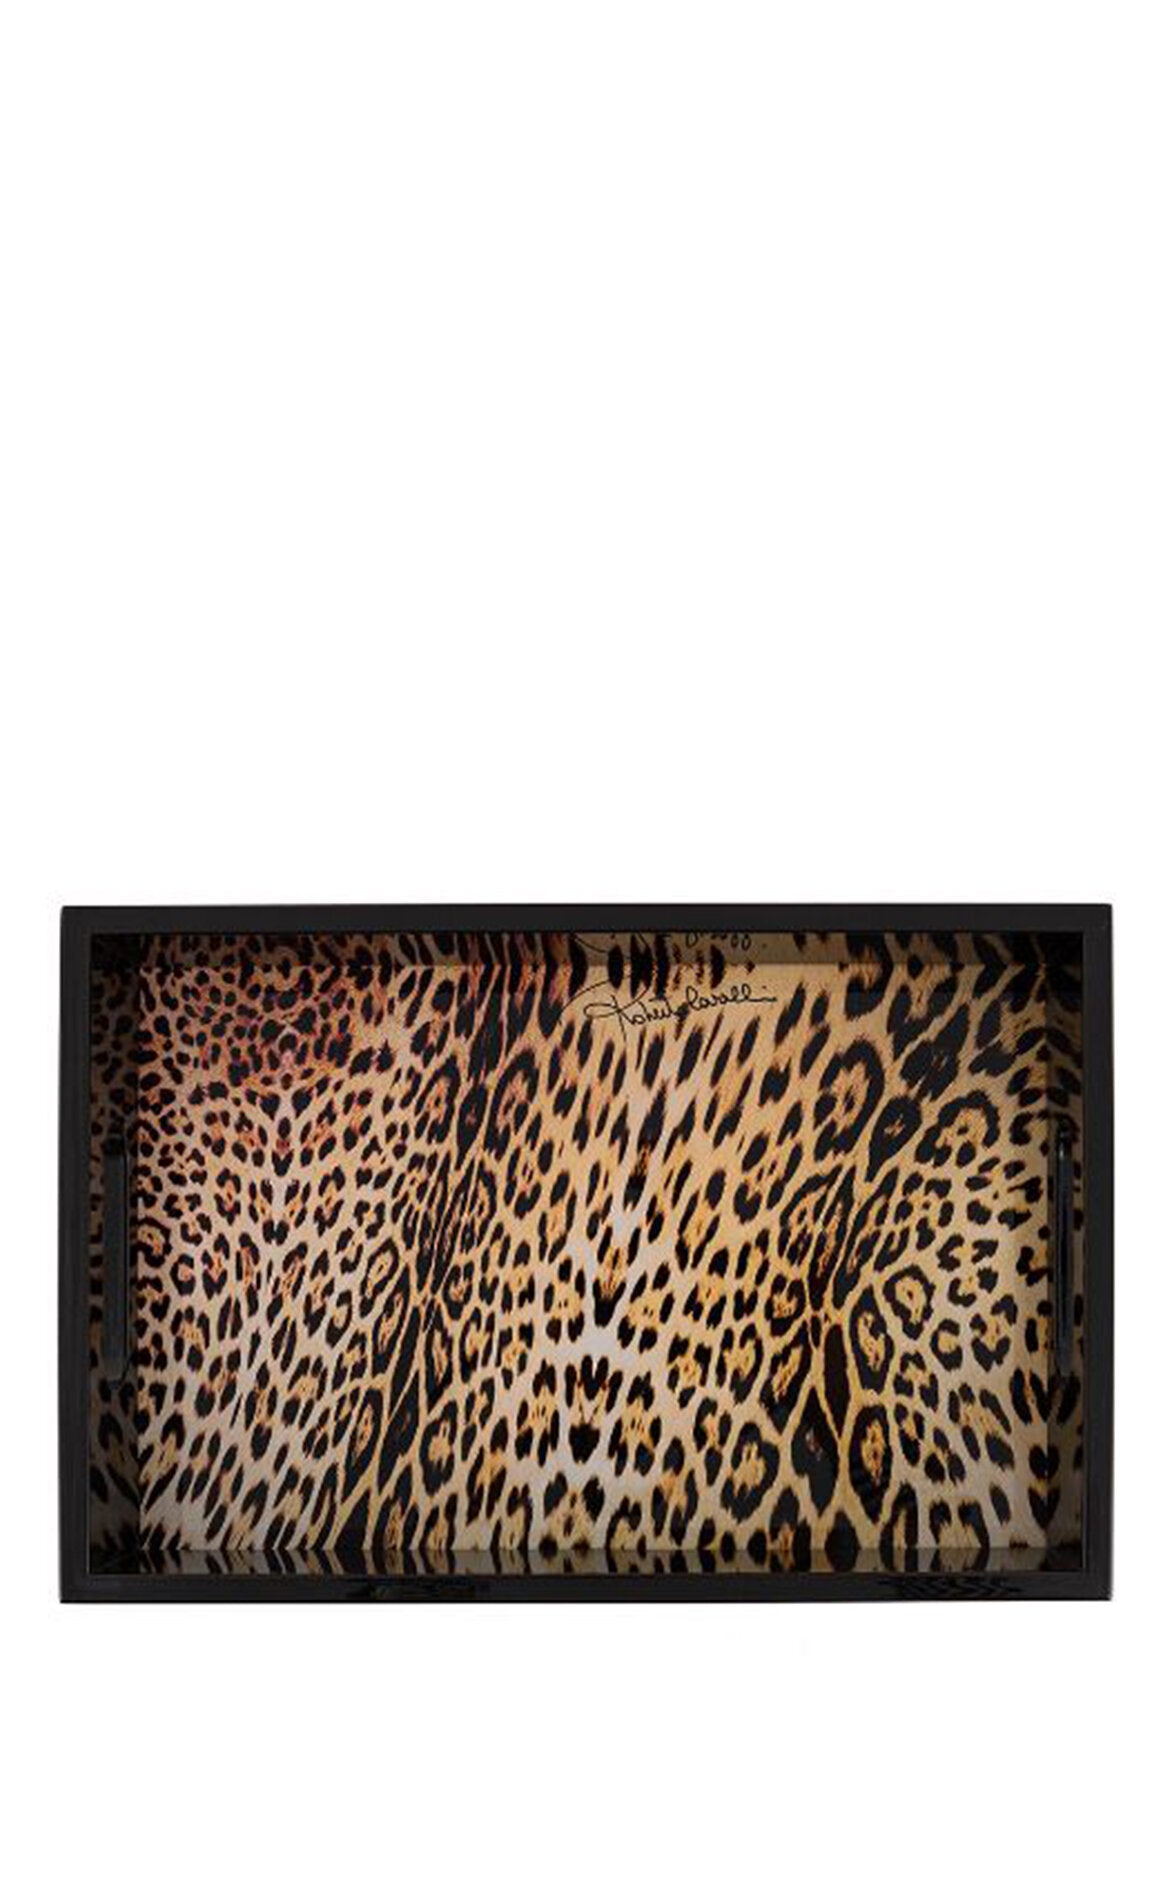 ROBERTO CAVALLI Jaguar S Dikdörtgen Tepsi, 20X30 cm D’Maison 